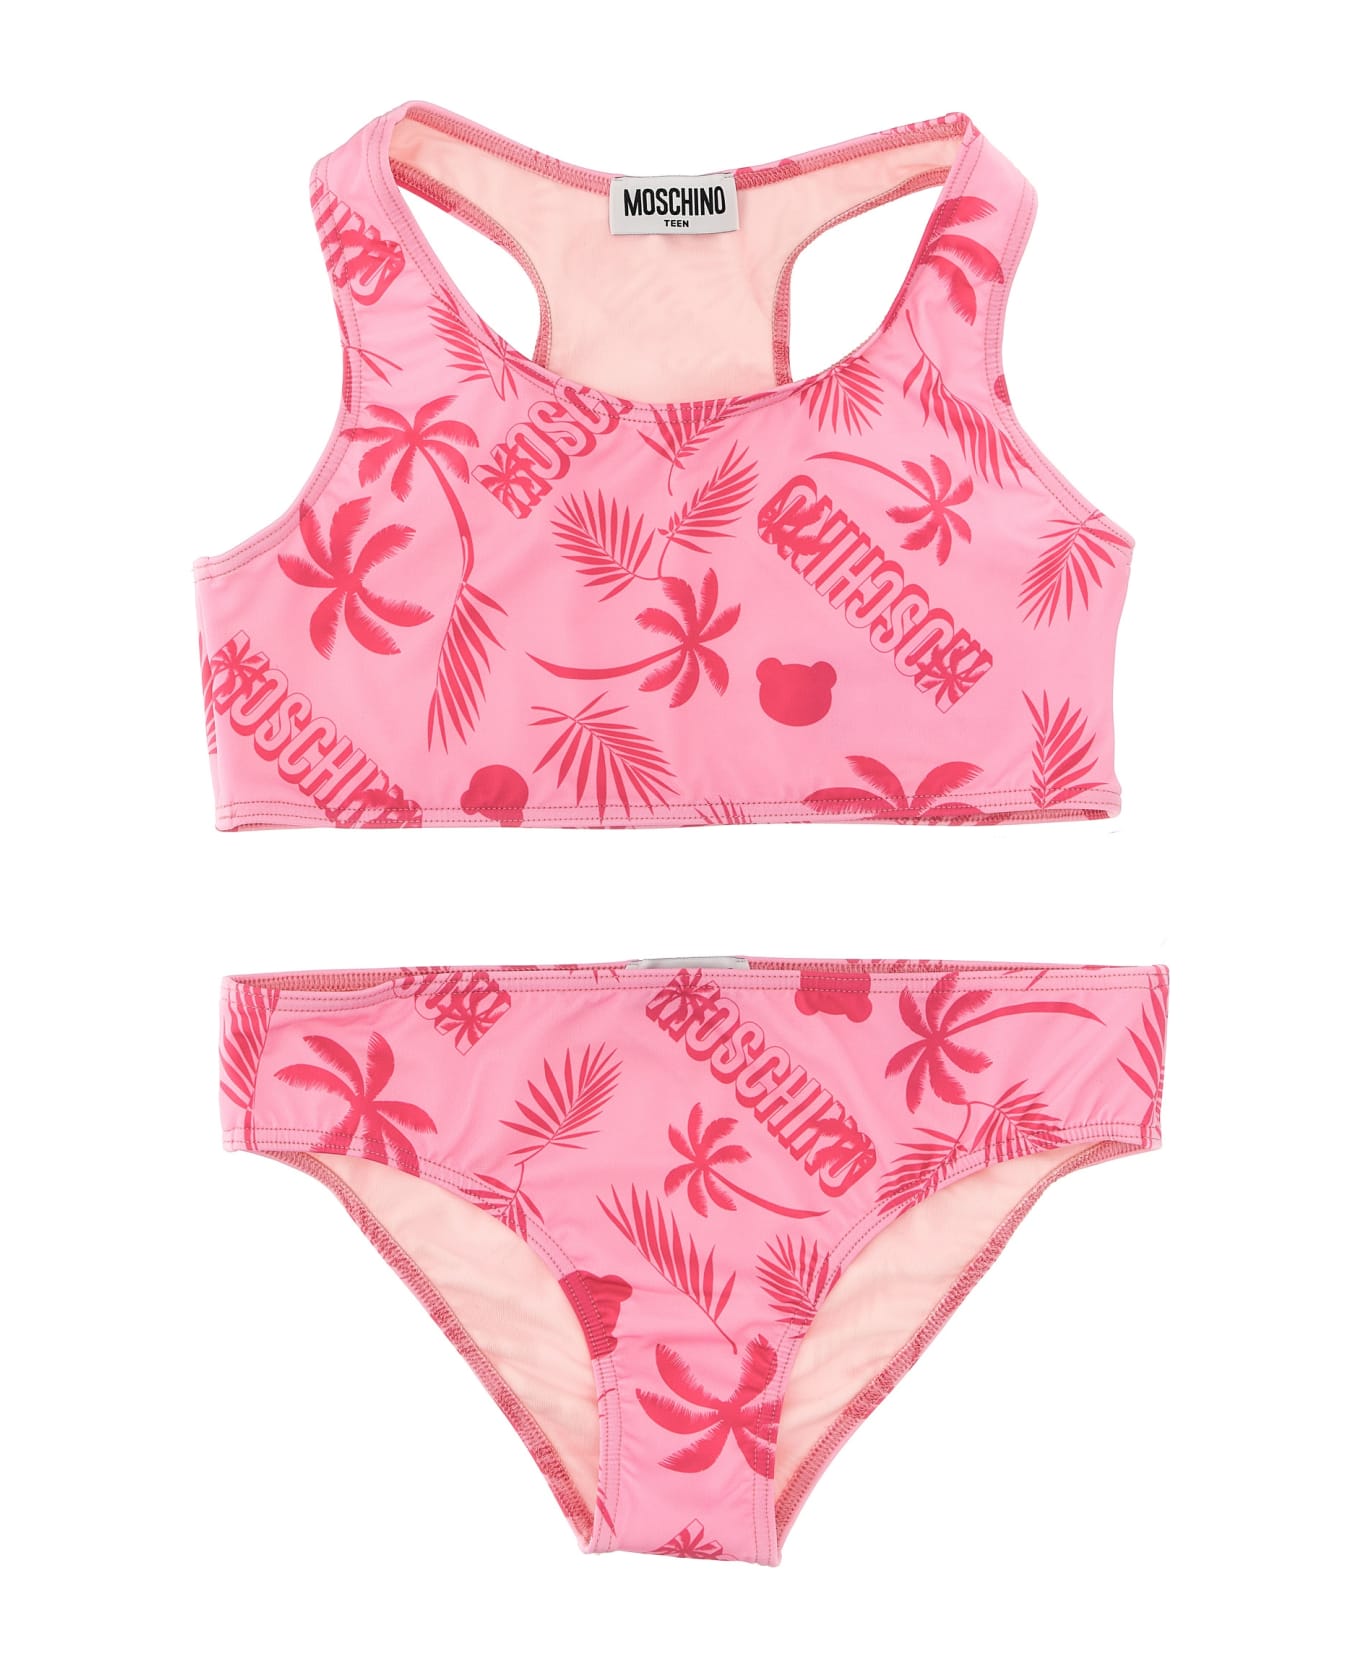 Moschino All Over Print Bikini - Pink